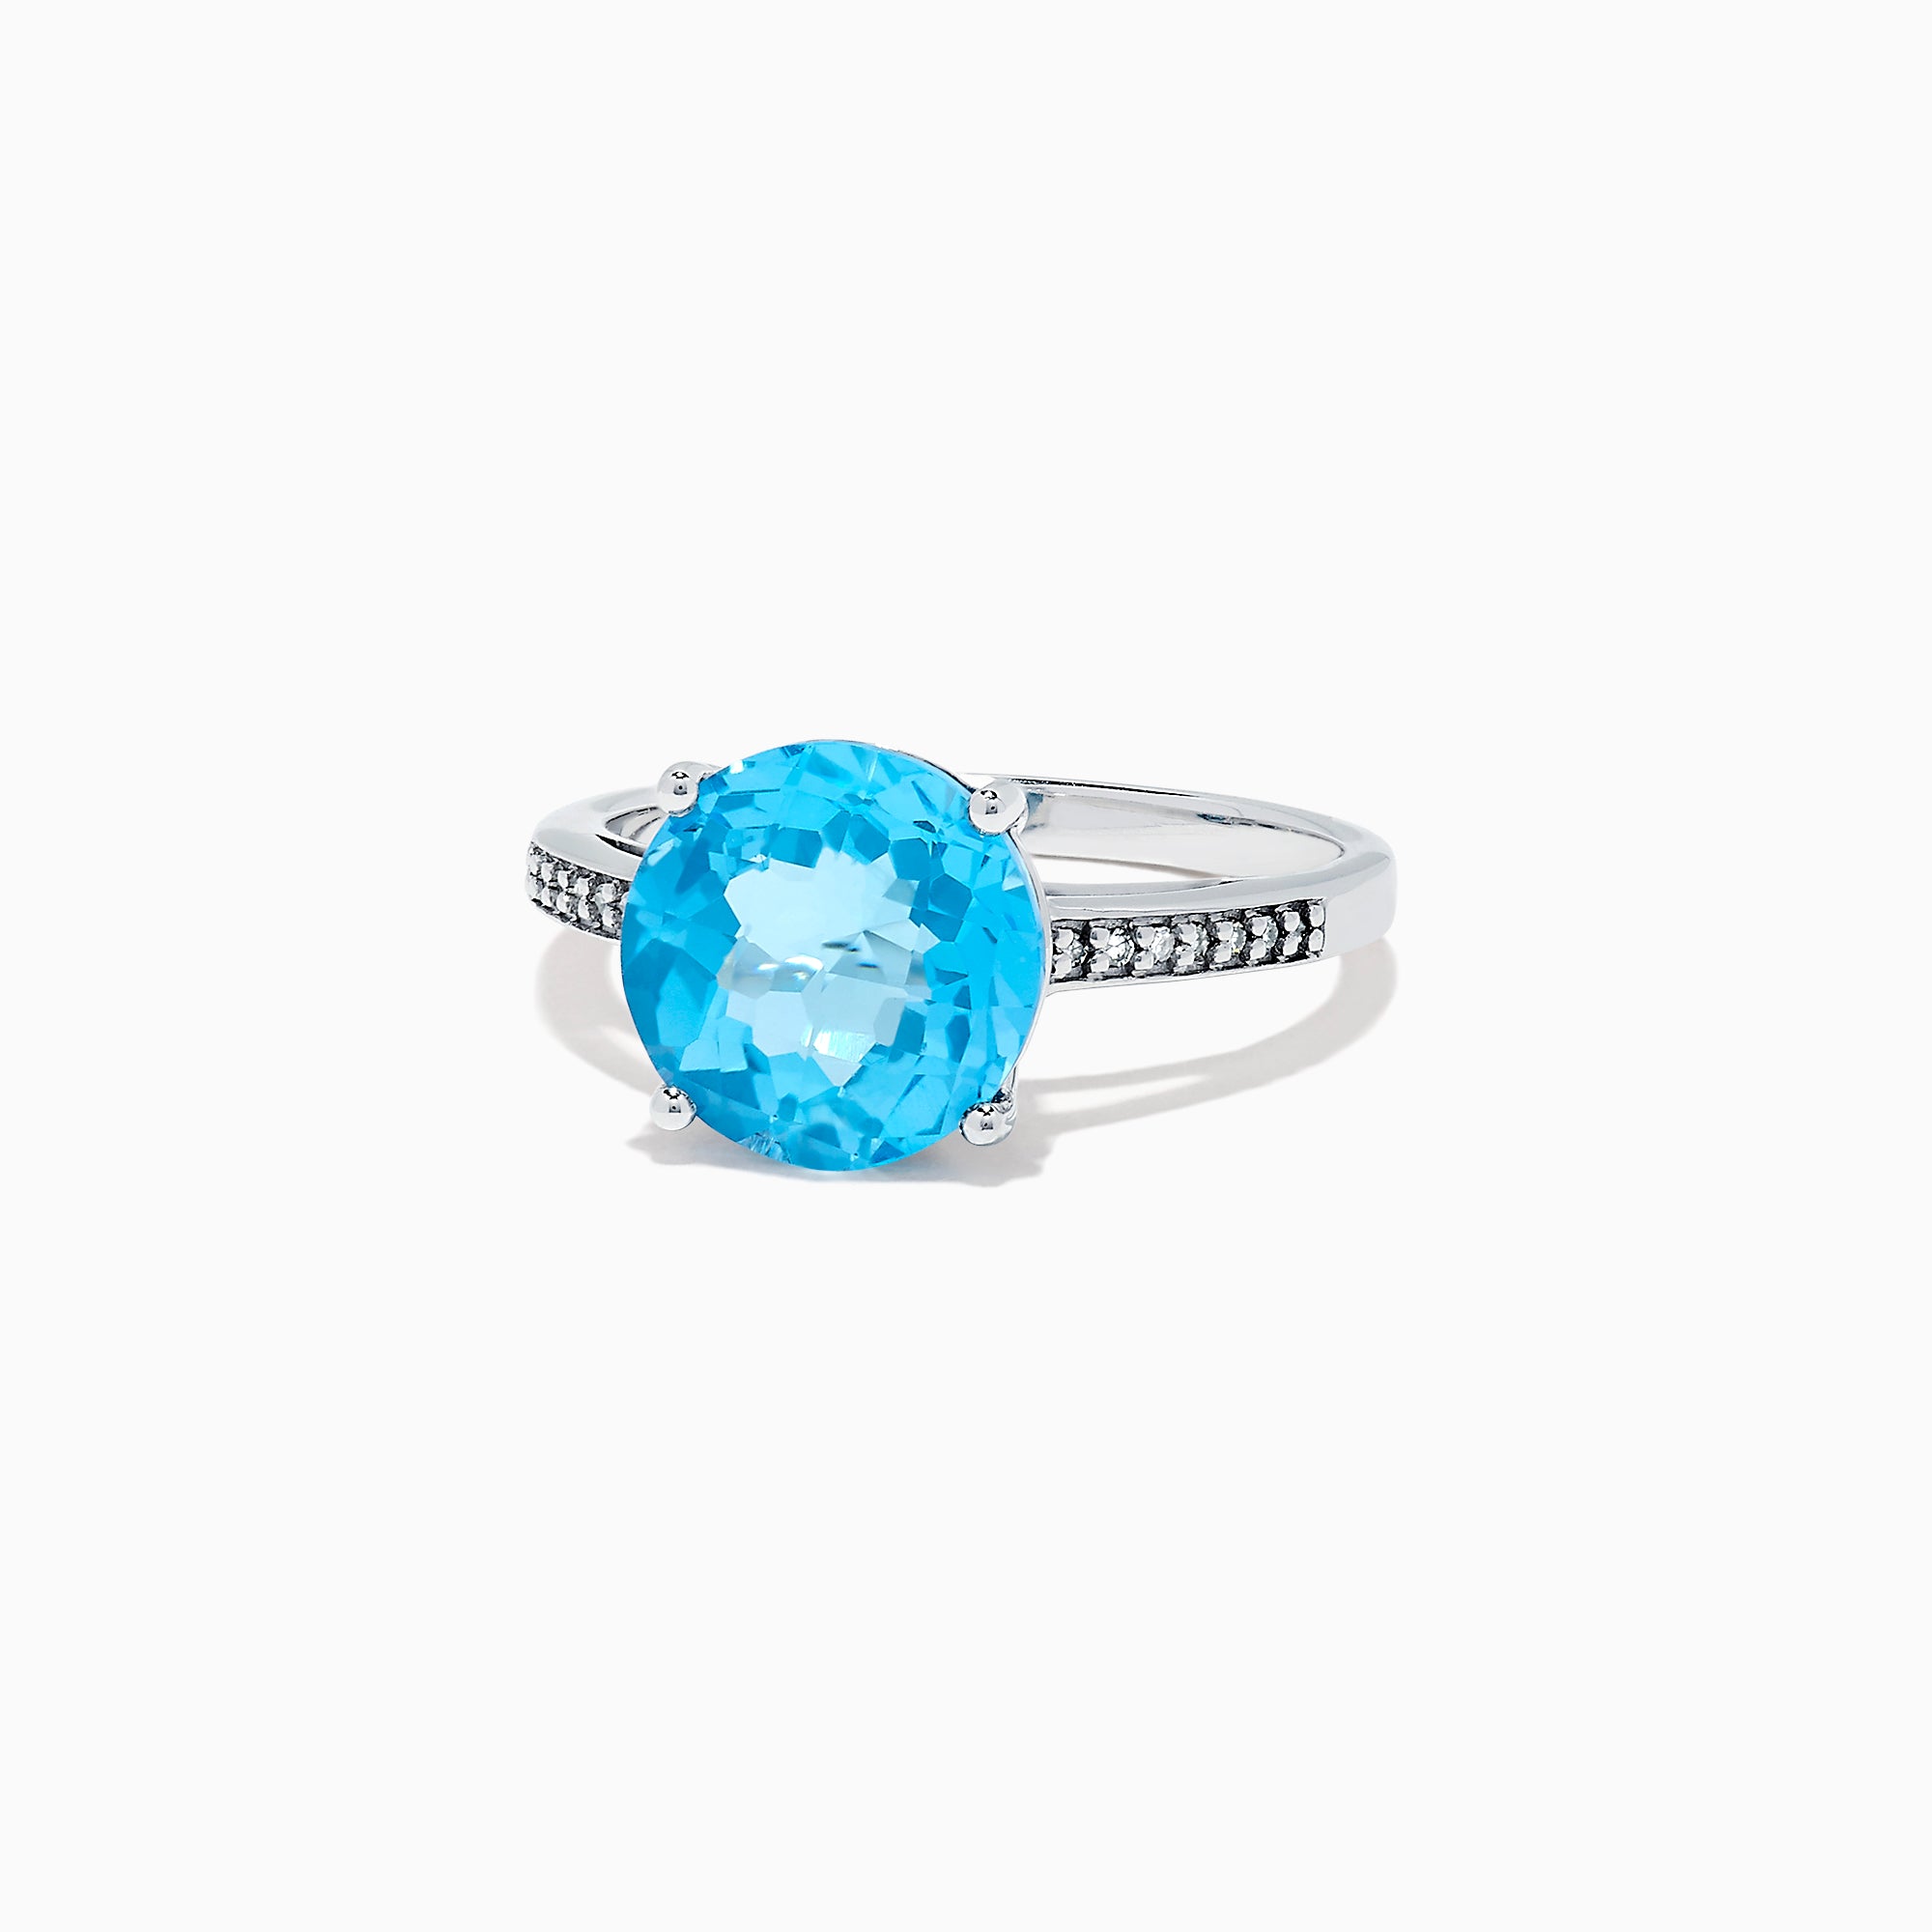 Effy Ocean Bleu 14K White Gold Blue Topaz and Diamond Ring, 4.74 TCW